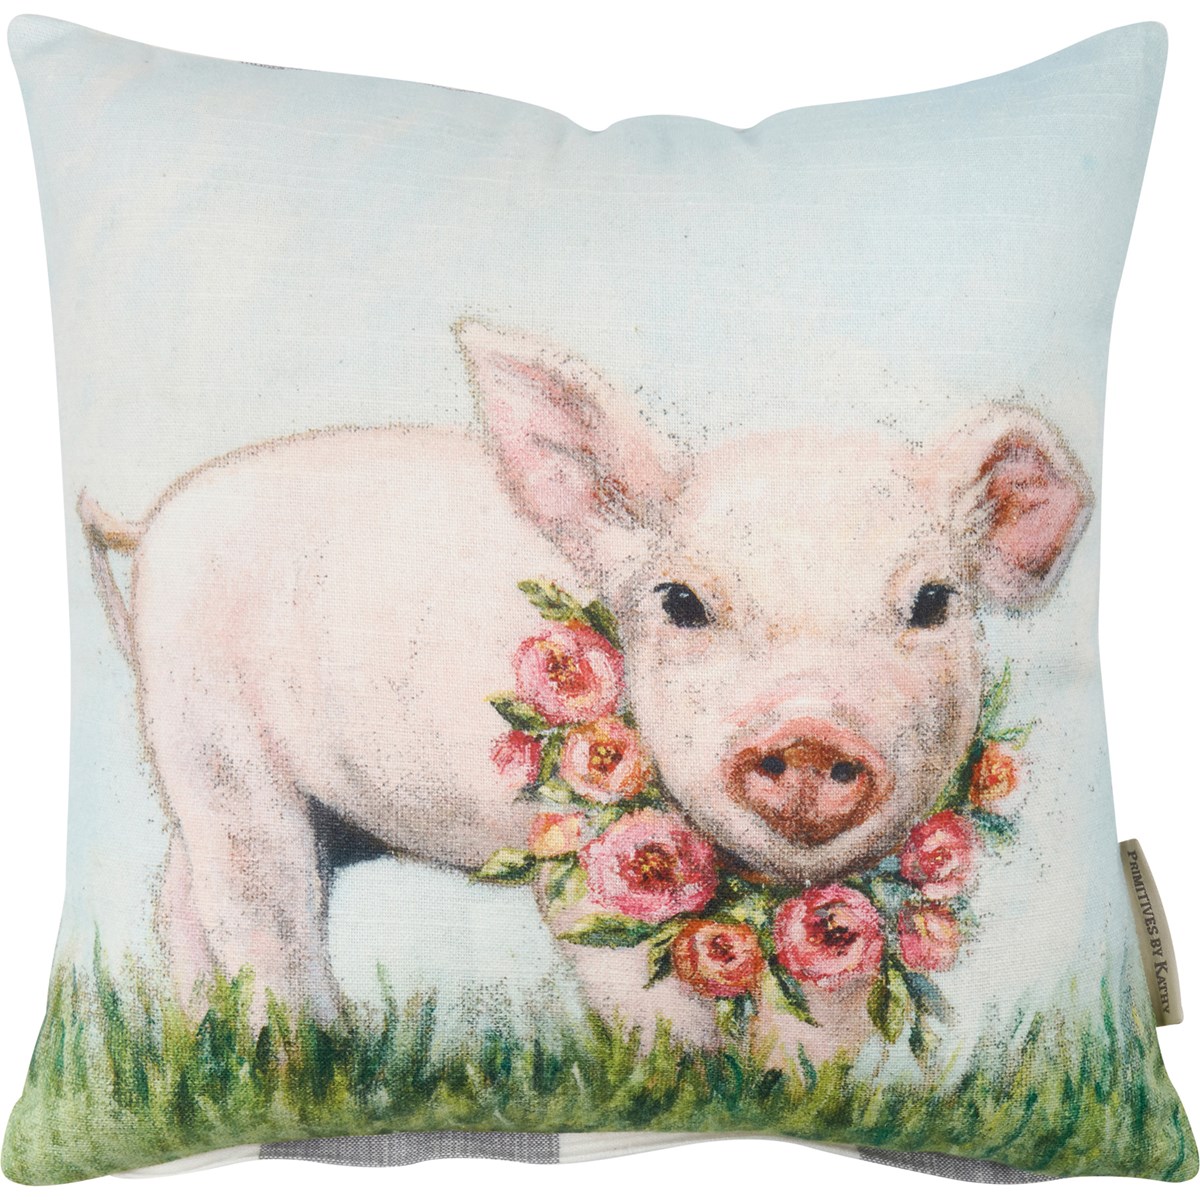 Floral Piglet Pillow - Cotton, Zipper